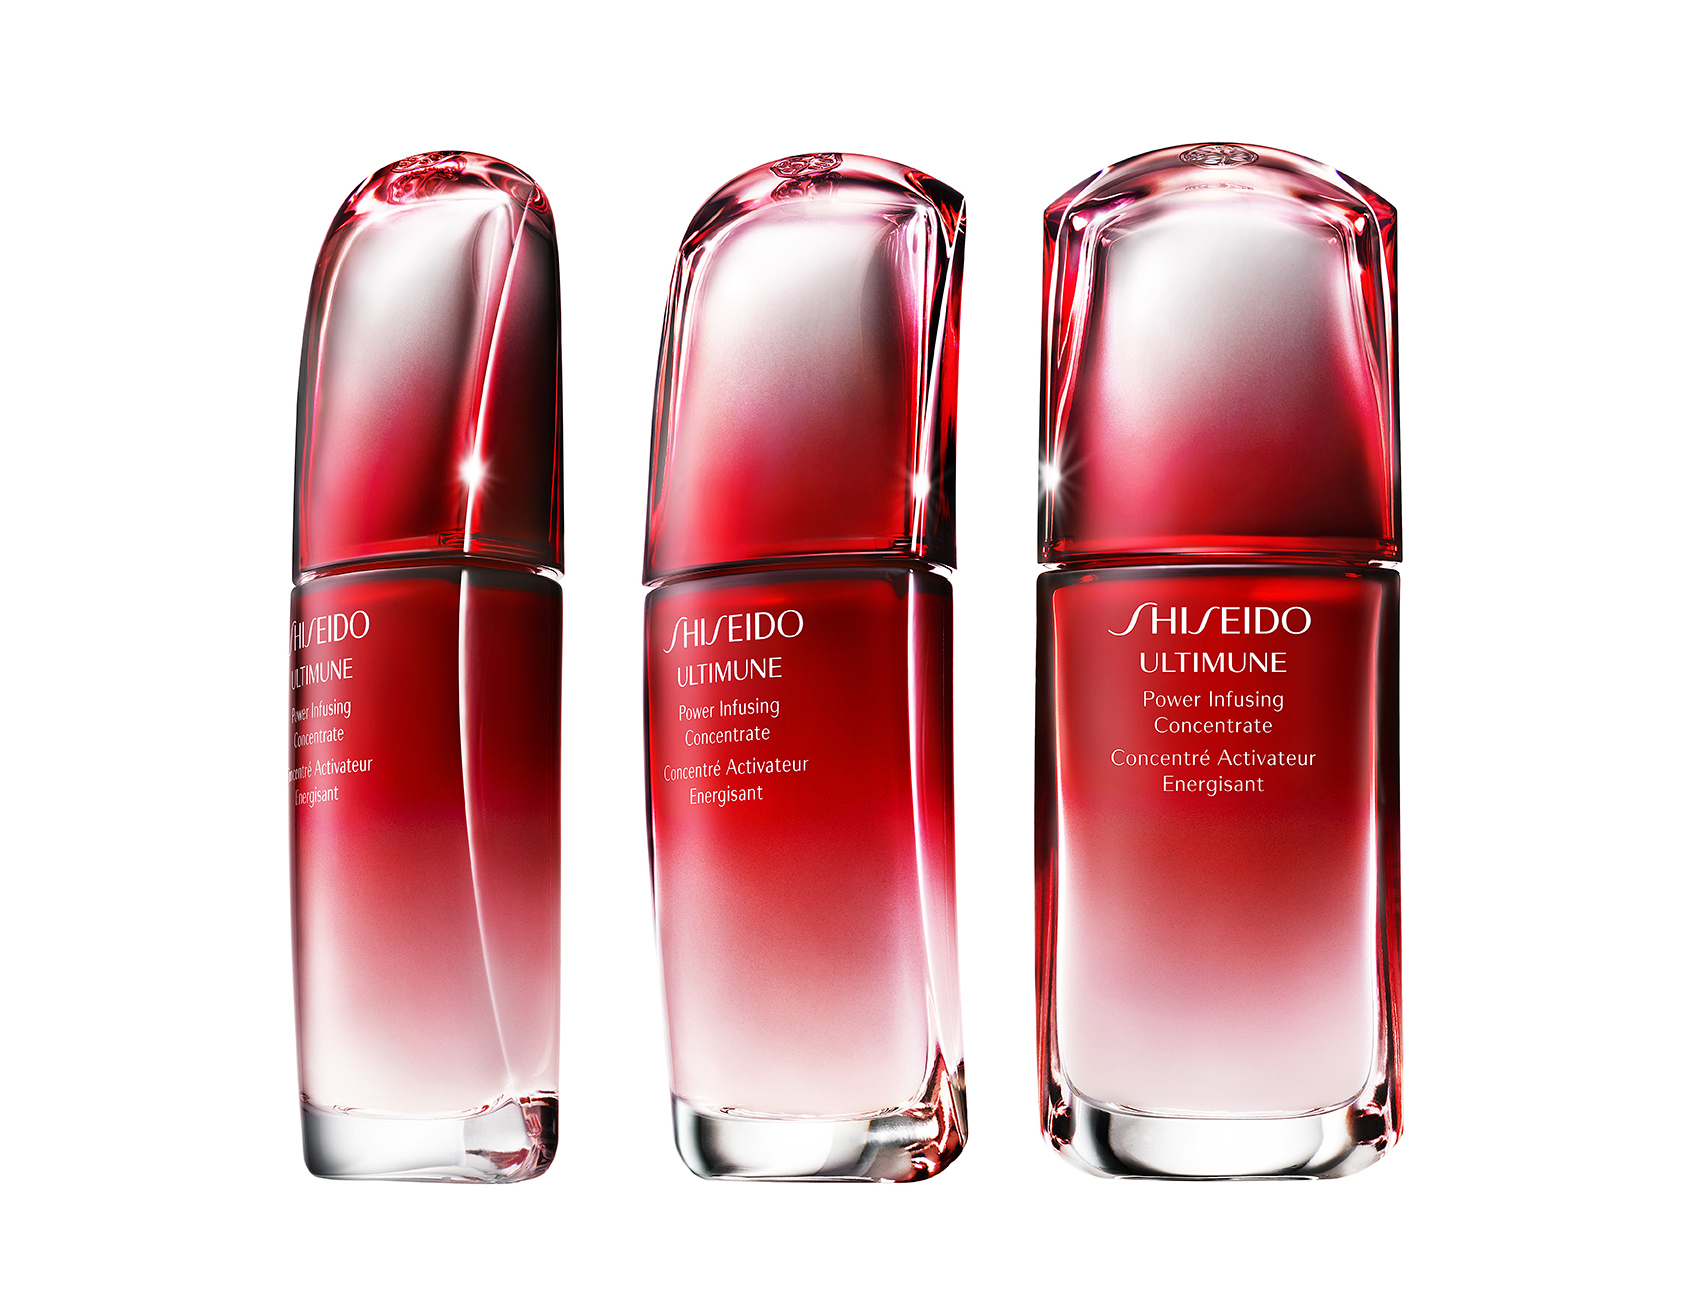 El suero Ultimune, de Shiseido